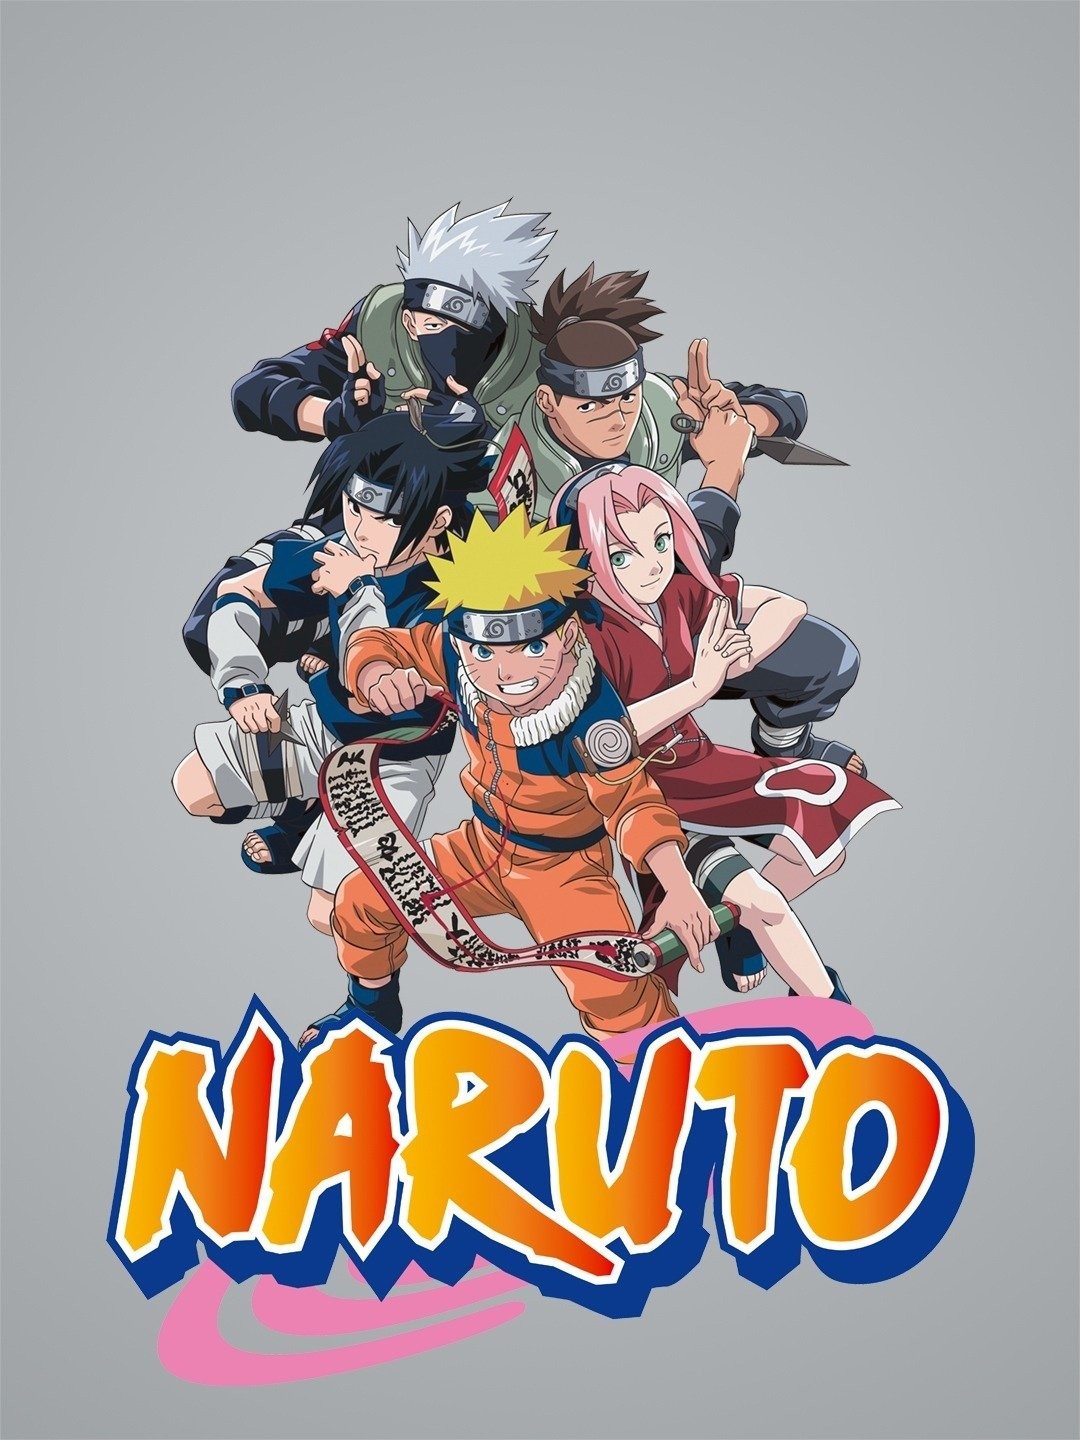 Honest opinions on ino? : r/Naruto